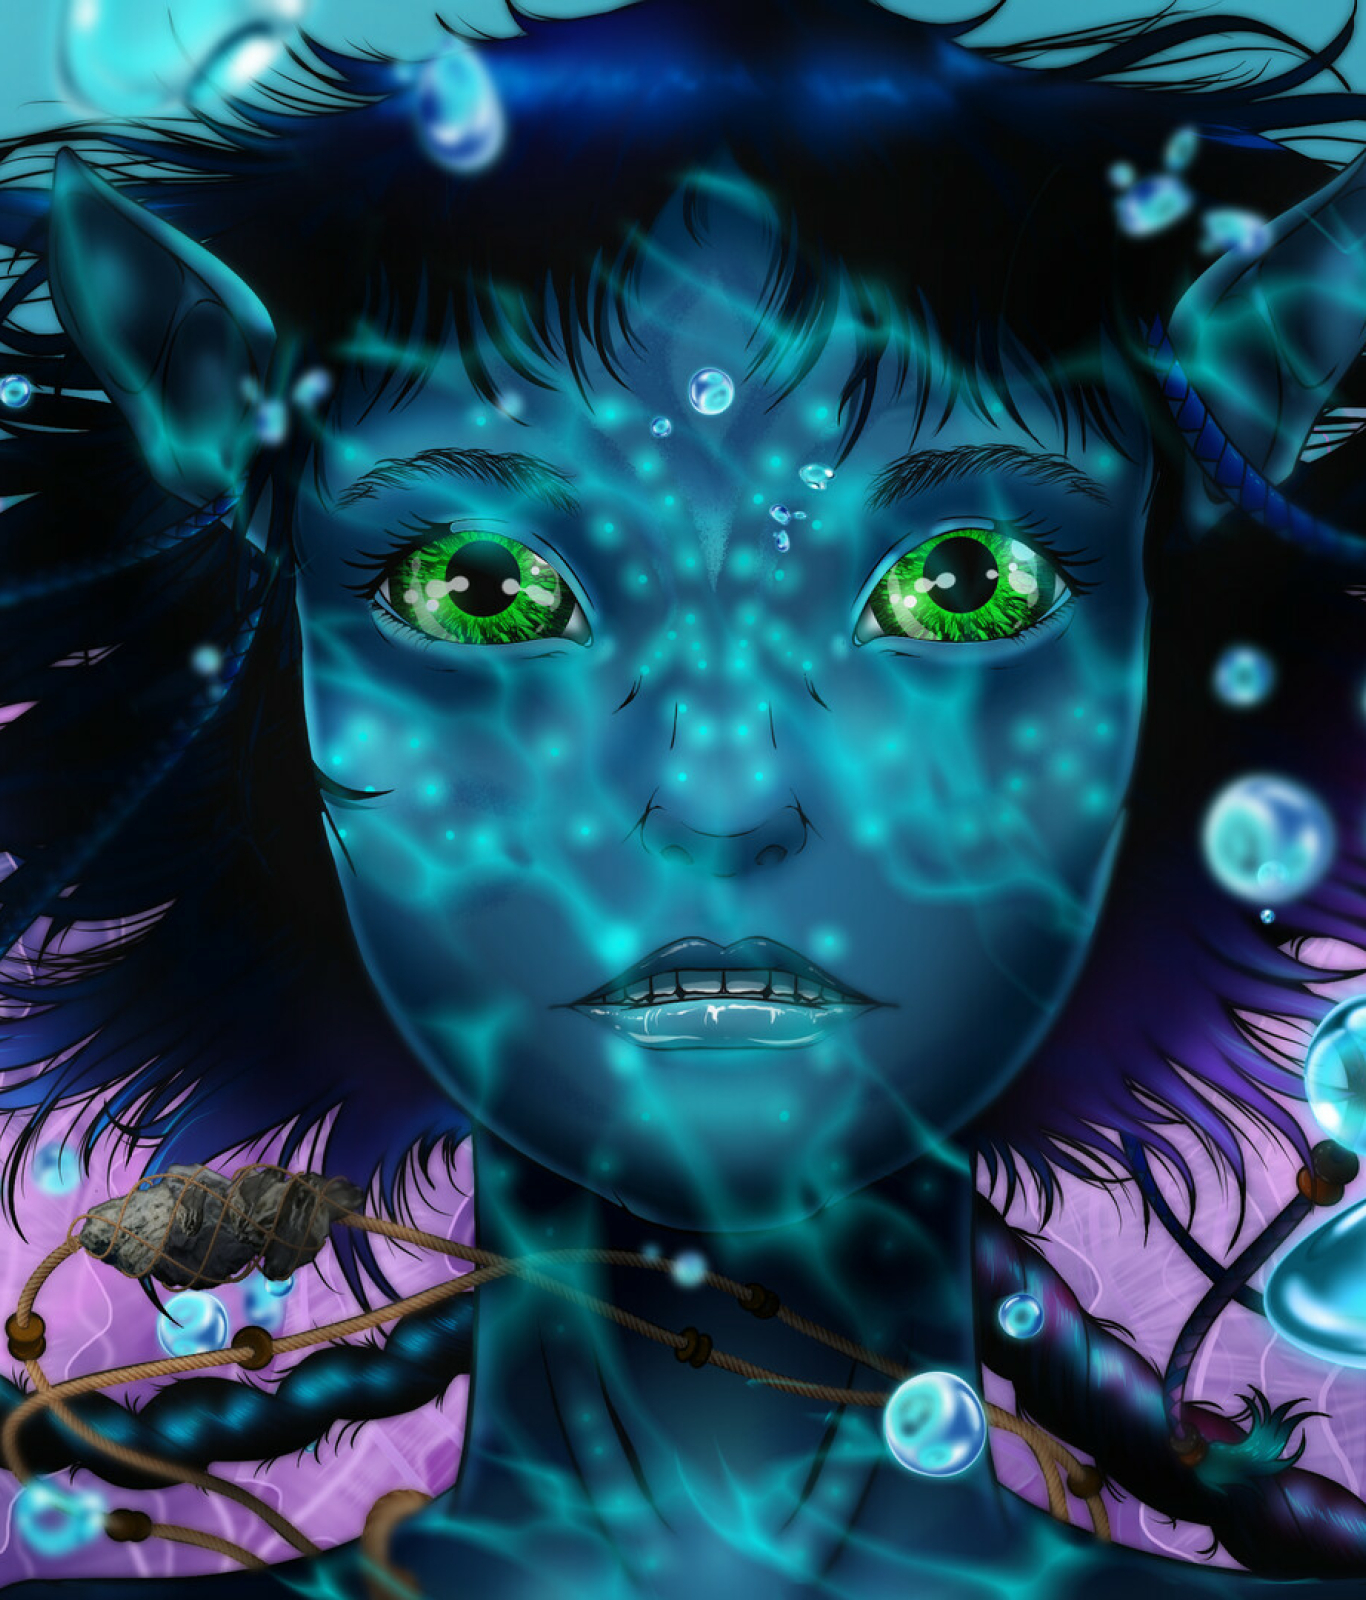 1366x1600 Cool Avatar The Way Of Water Digital Art 1366x1600 Resolution Wallpaper Hd Movies 4k 2682